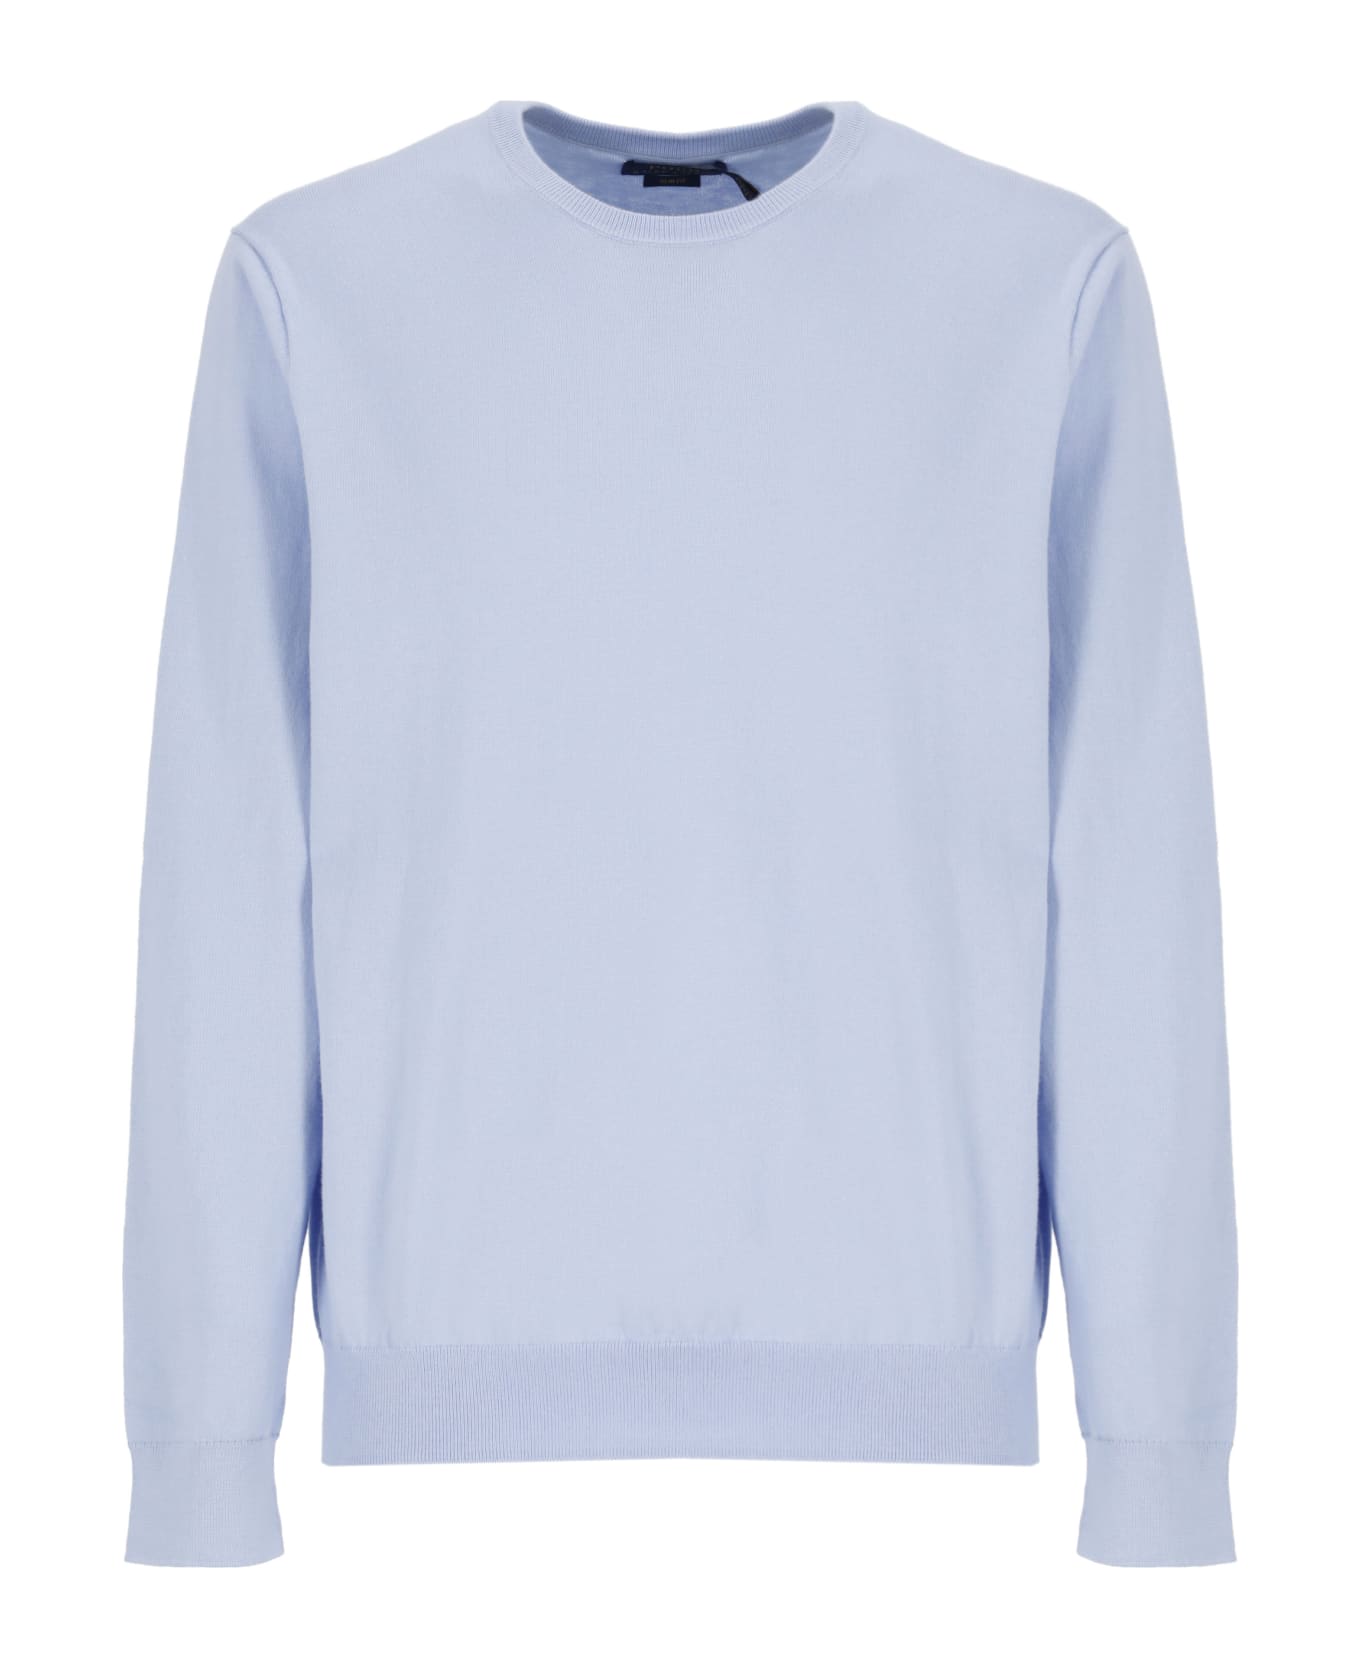 Ralph Lauren Pony Sweater - Light Blue